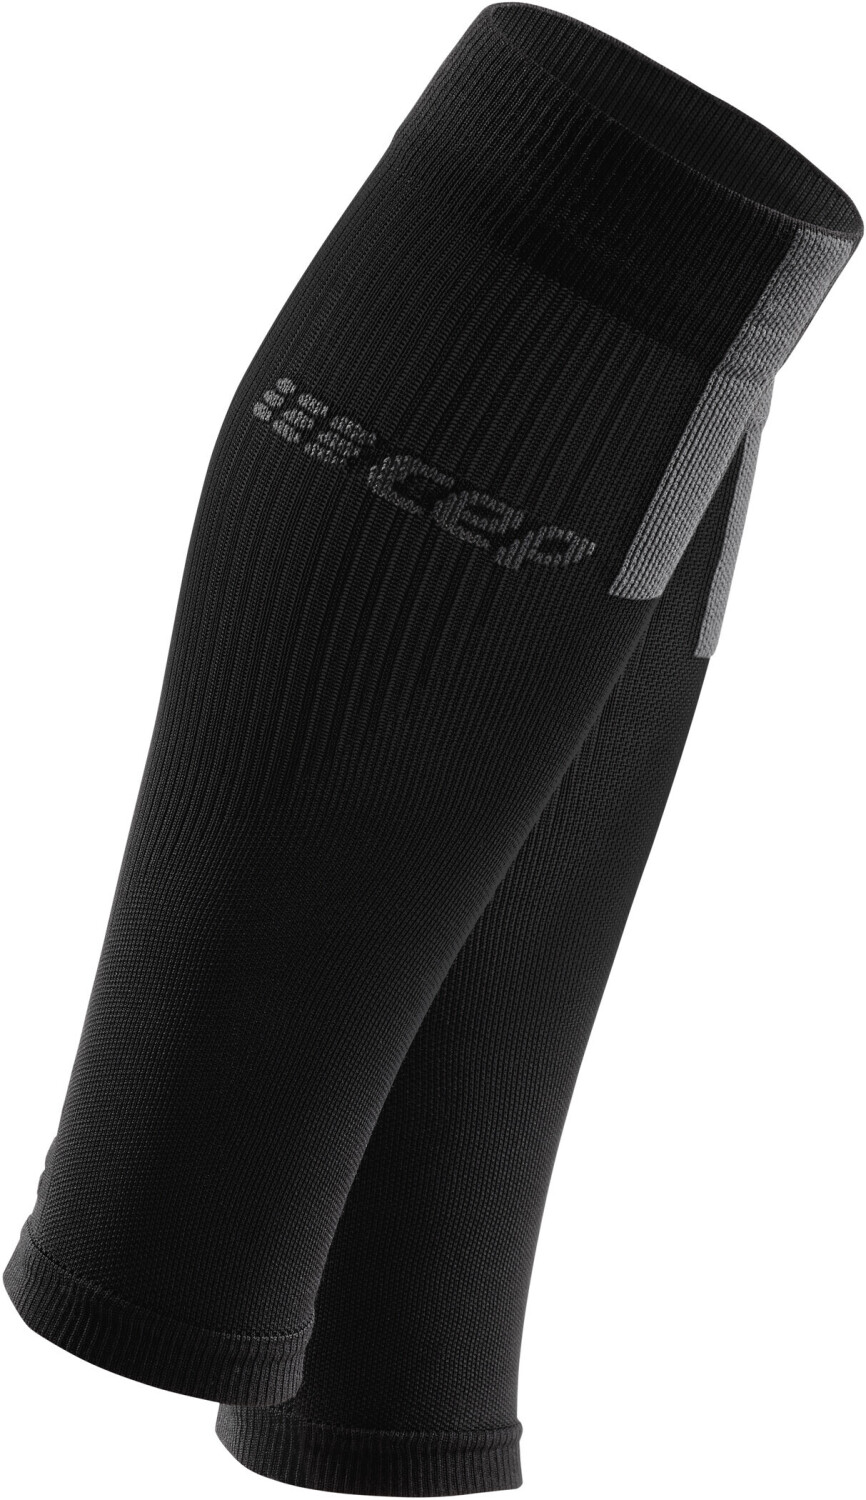 CEP Calf Sleeves 3.0 Damen black/dark grey ab 25,00 €